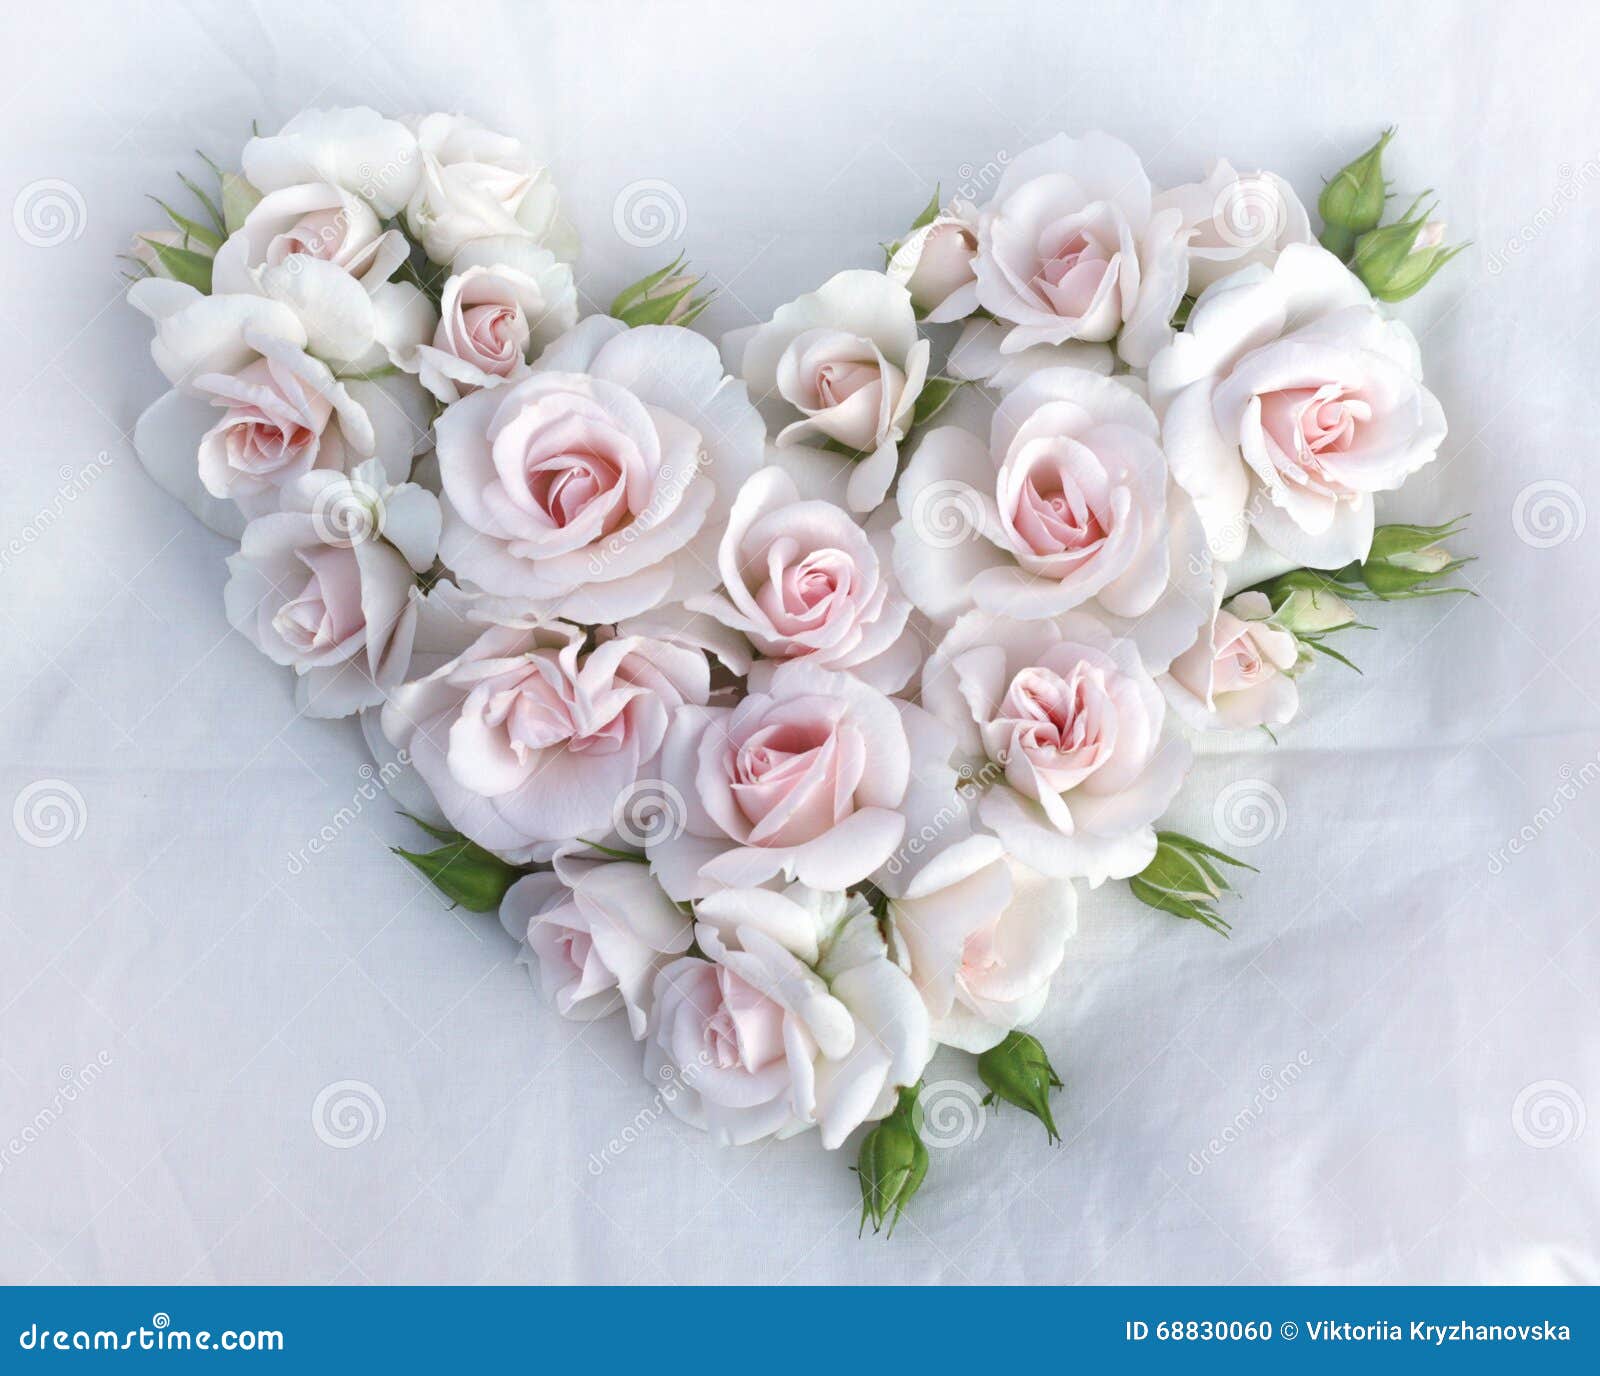 Forme De Coeur De Roses Blanches Photo stock - Image du carte, tissu:  68830060